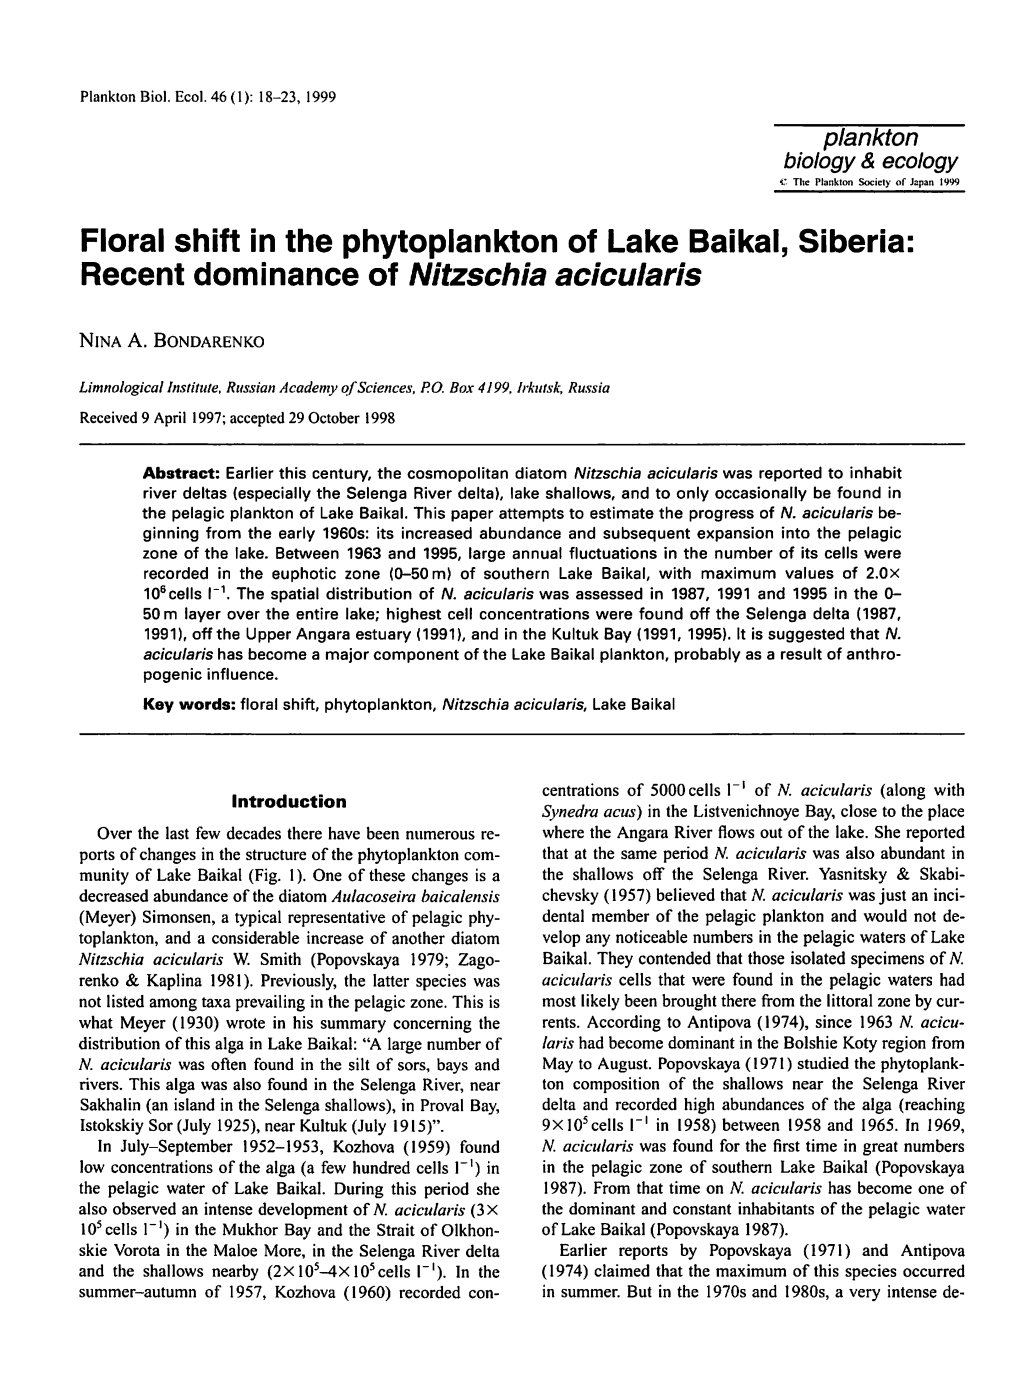 Floral Shift in the Phytoplankton of Lake Baikal, Siberia: Recent Dominance of Nitzschia Acicularis